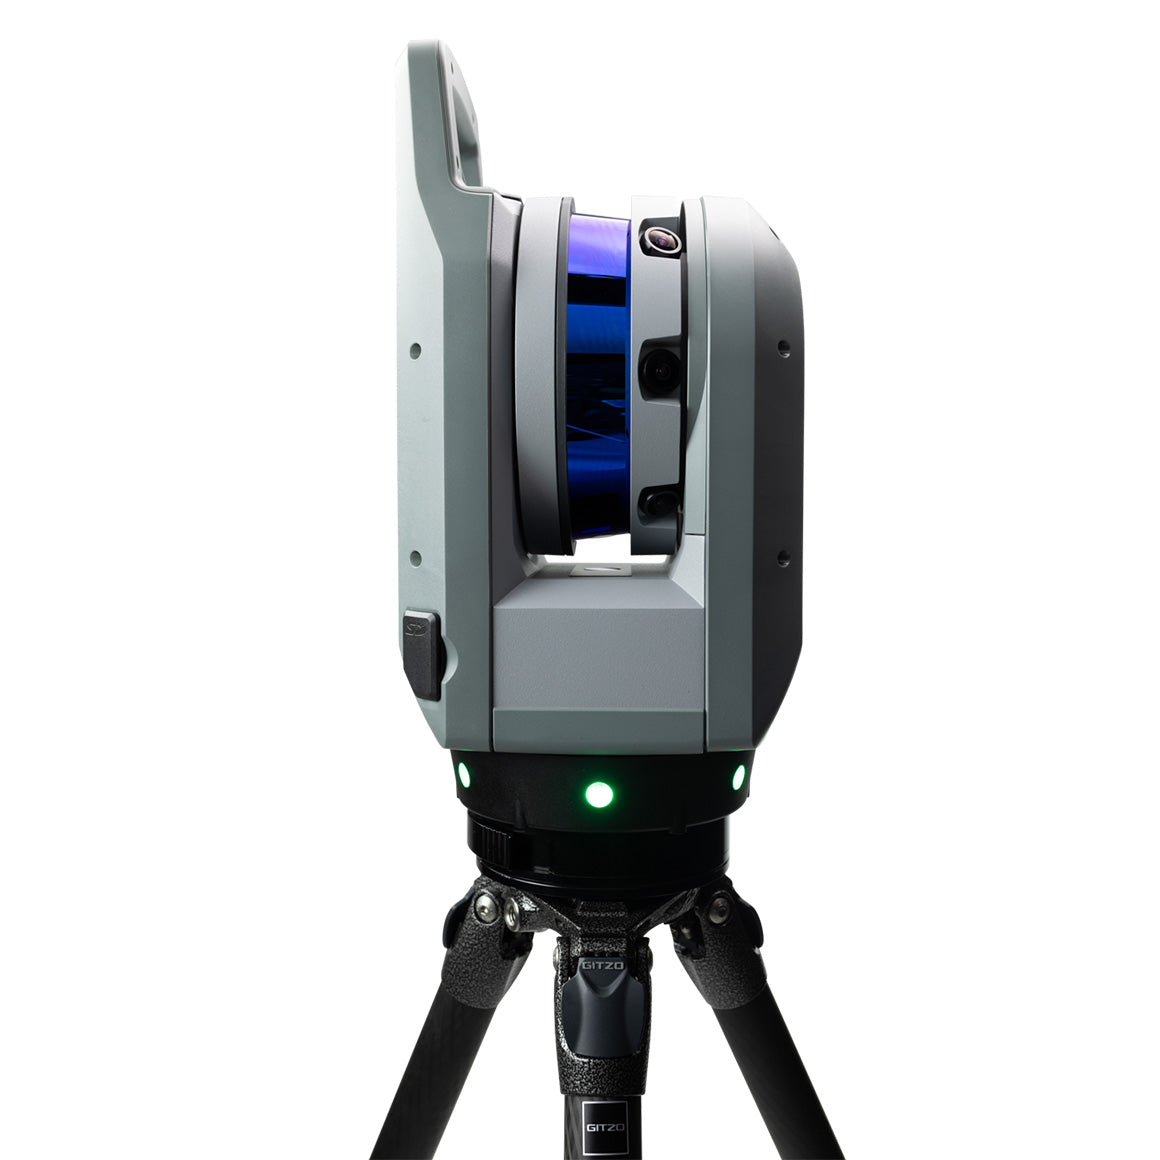 Trimble X9 3D Laser Scanning System